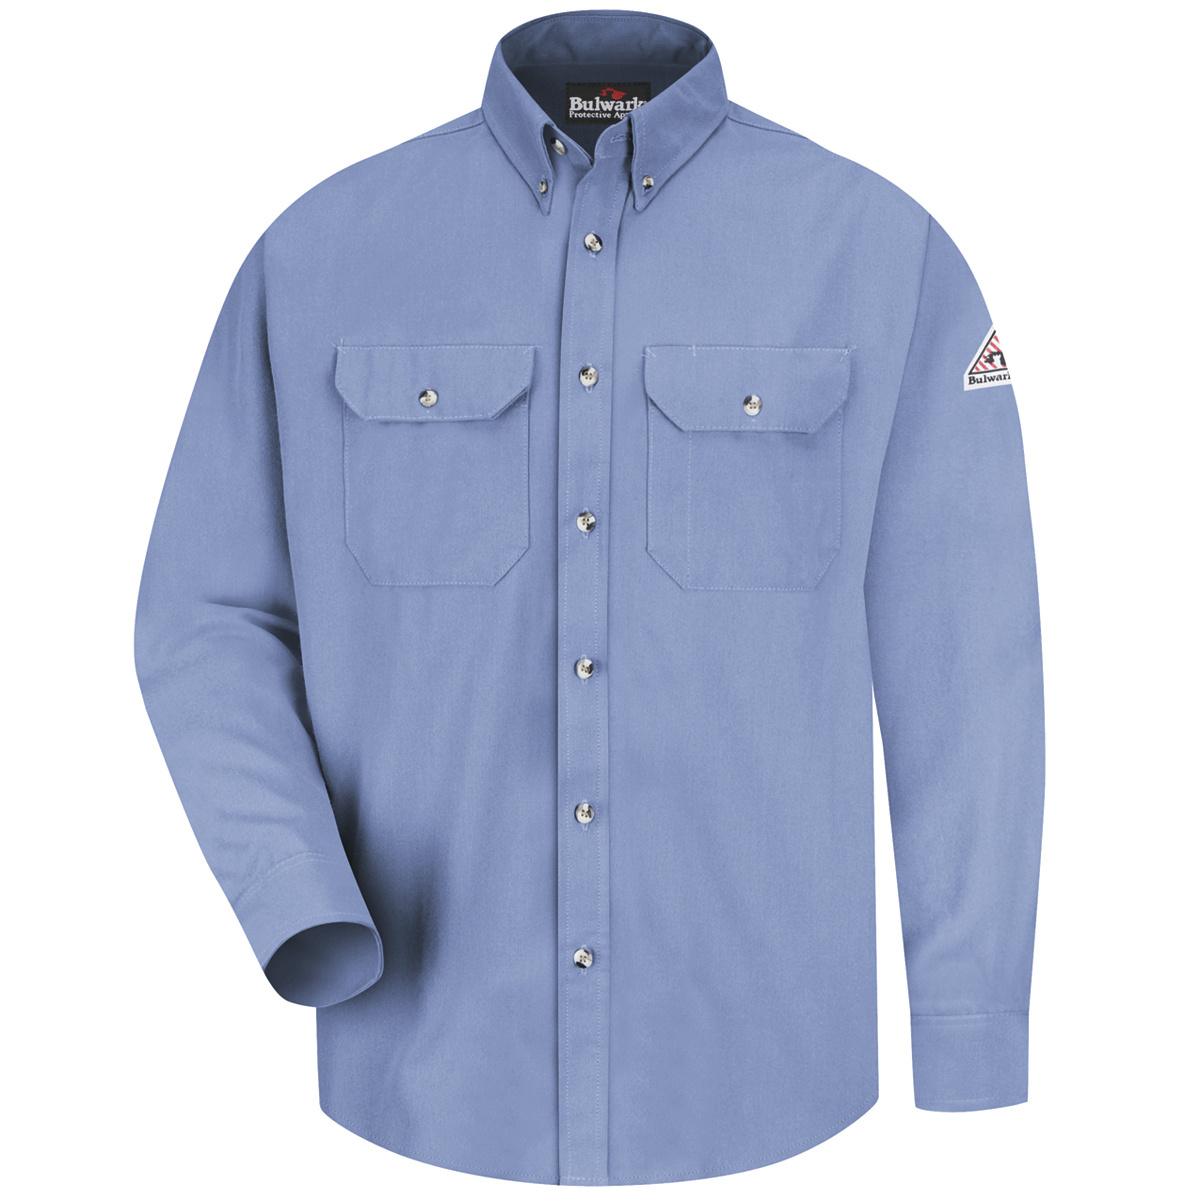 Bulwark® Medium Tall Light Blue Modacrylic/Lyocell/Aramid Flame Resistant Dress Uniform Shirt With Button Front Closure